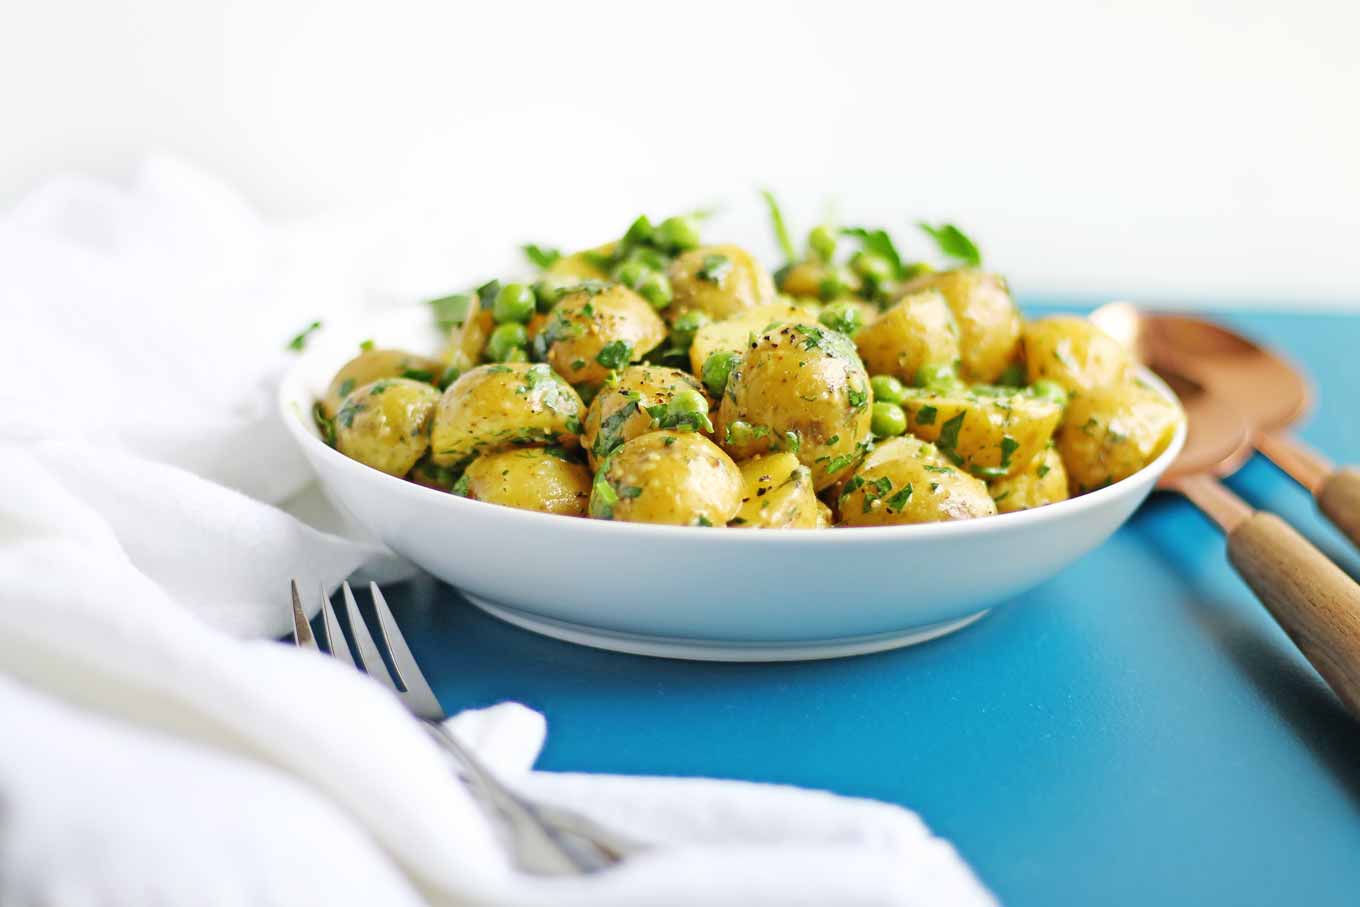 Healthy vegan potato salad recipe with peas and herbs - Rhubarbarians